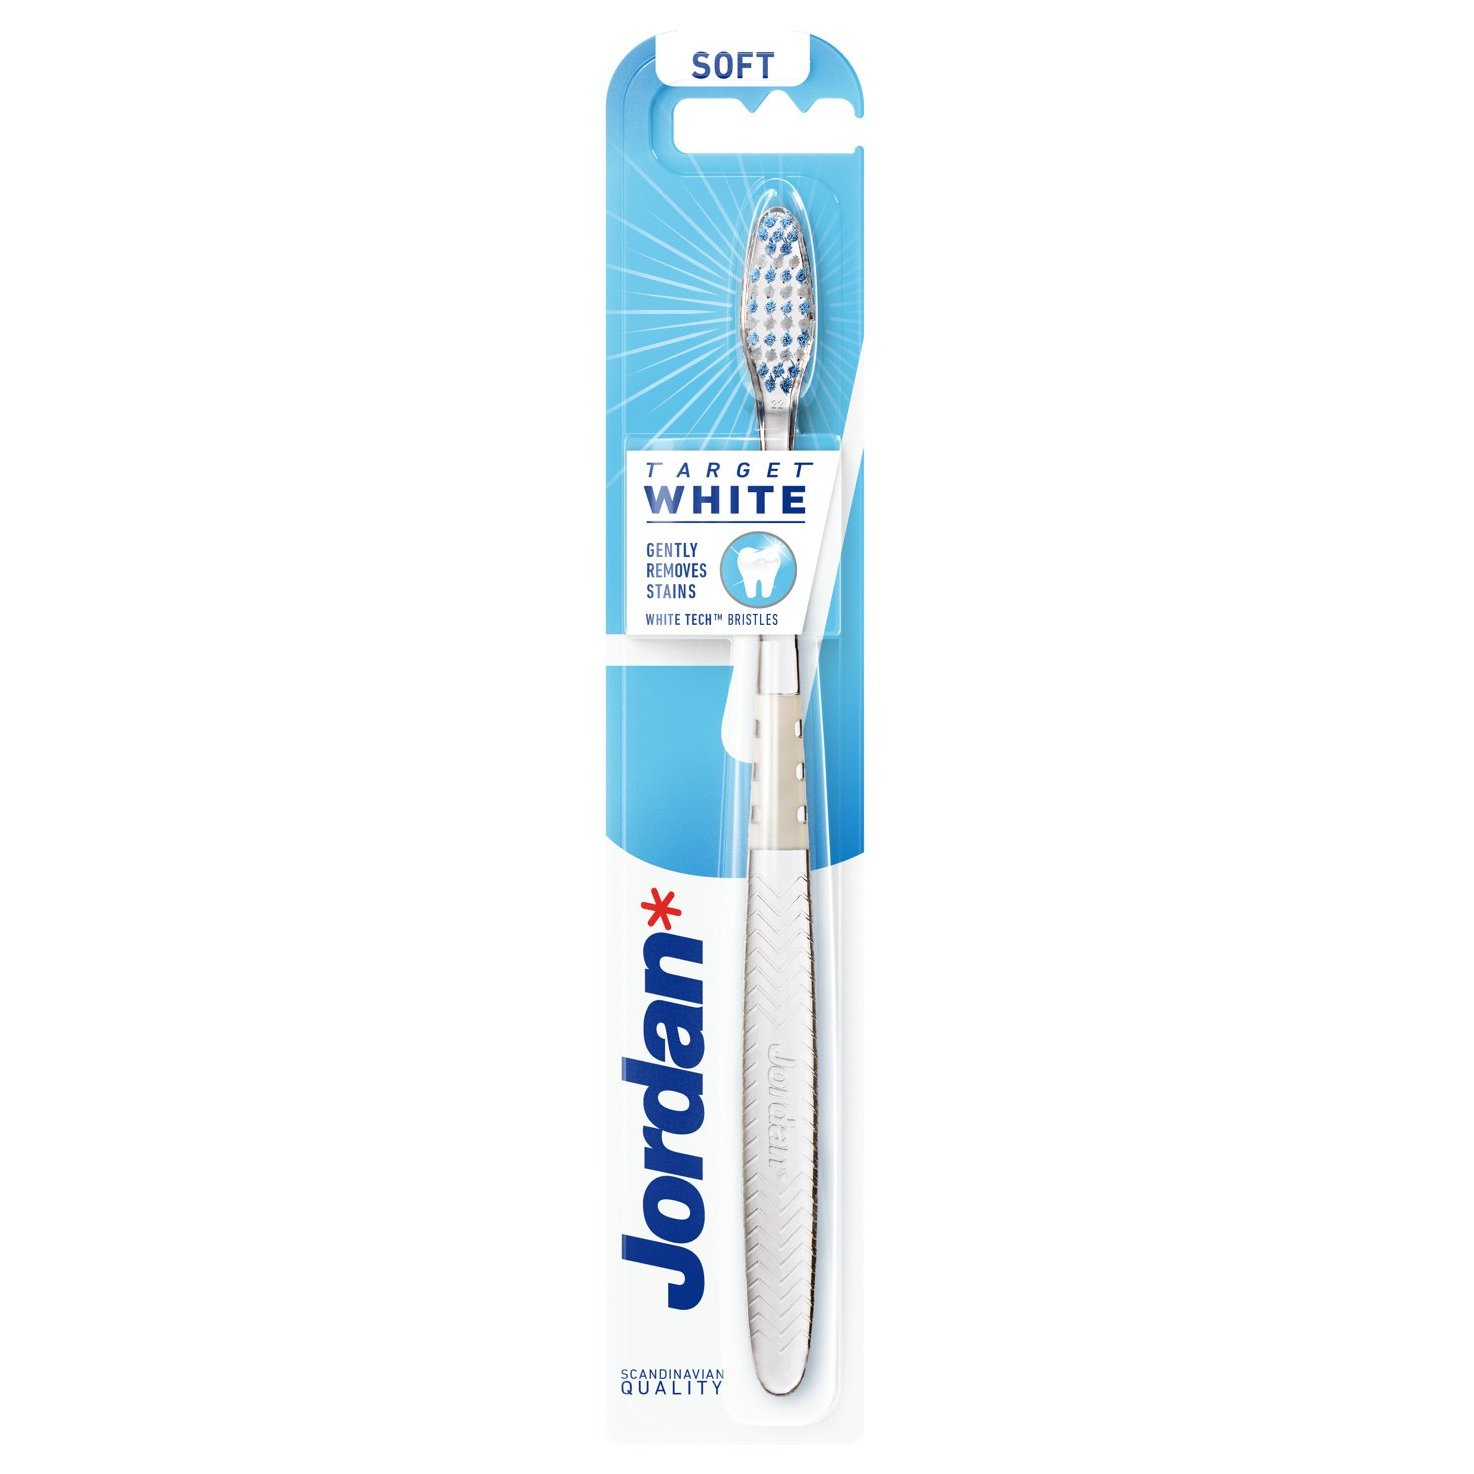 Jordan Target White Toothbrush Soft Μαλακή Οδοντόβουρτσα για Λεύκανση με Ίνες WhiteTech 1 Τεμάχιο – Άσπρο